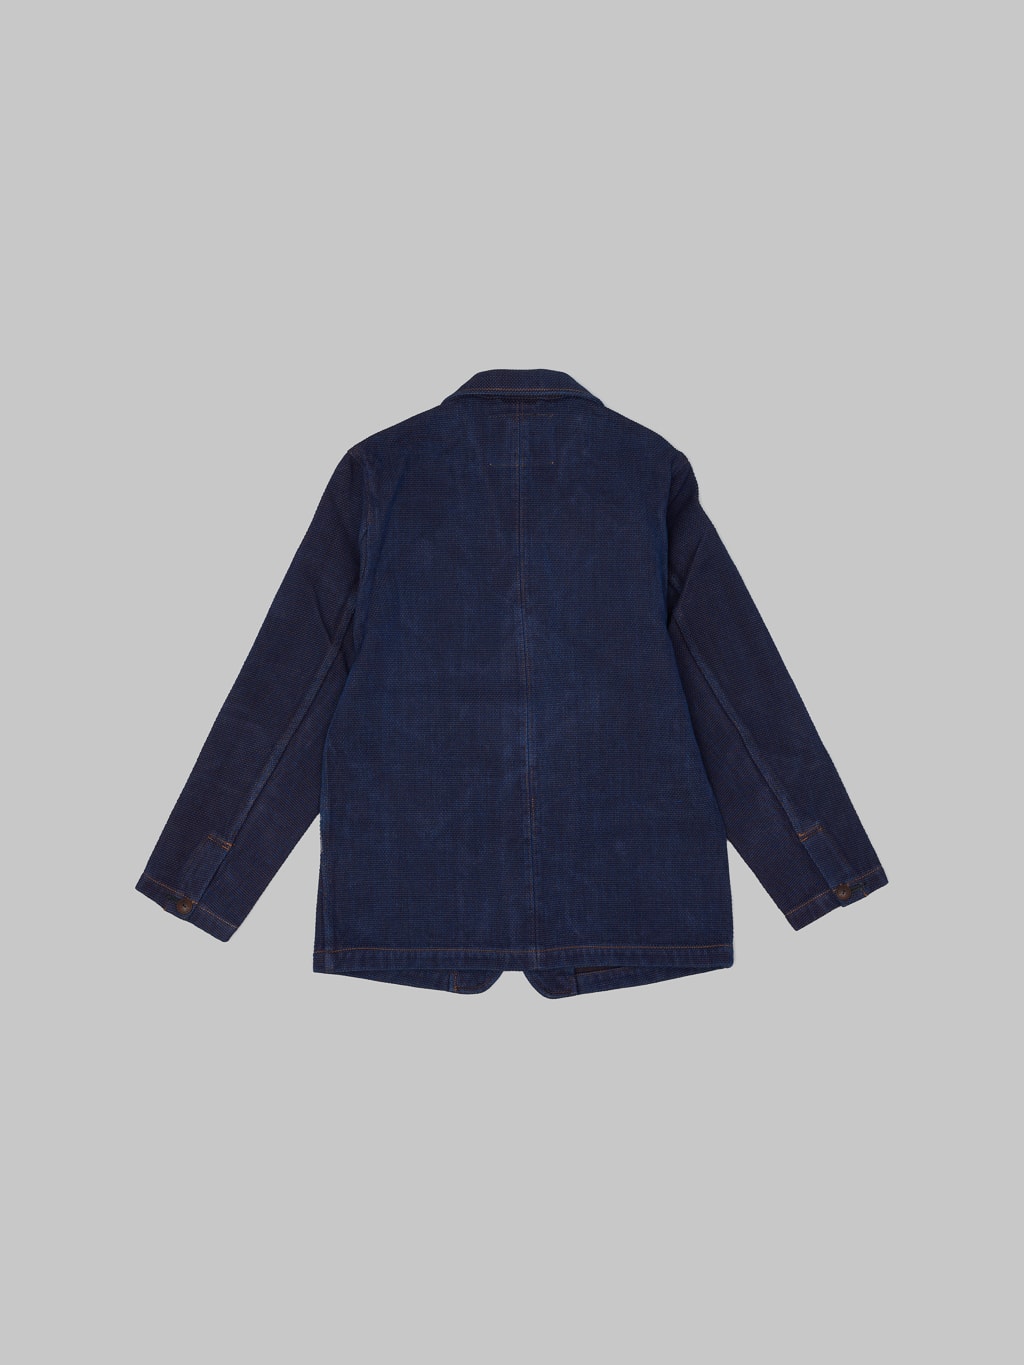 Studio Dartisan indigo kakishibu sashiko selvedge jacket back